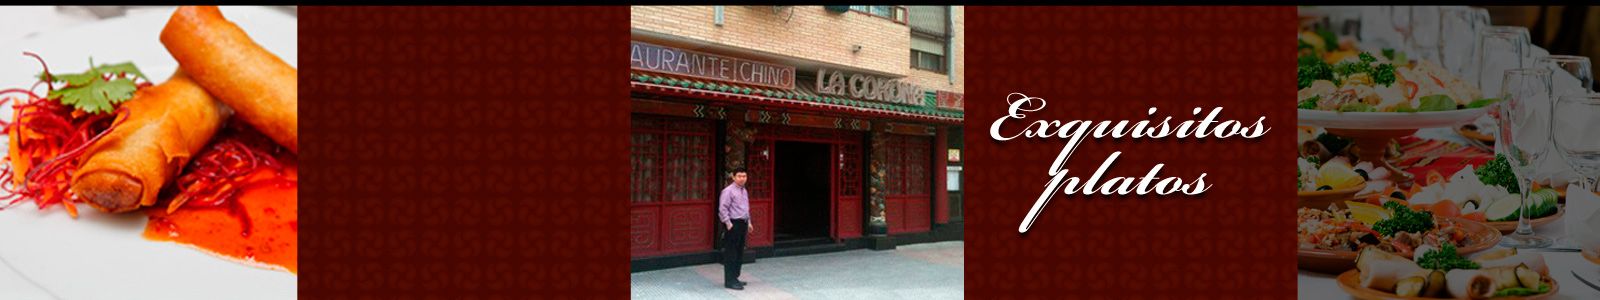 Restaurante Chino La Corona banner 1